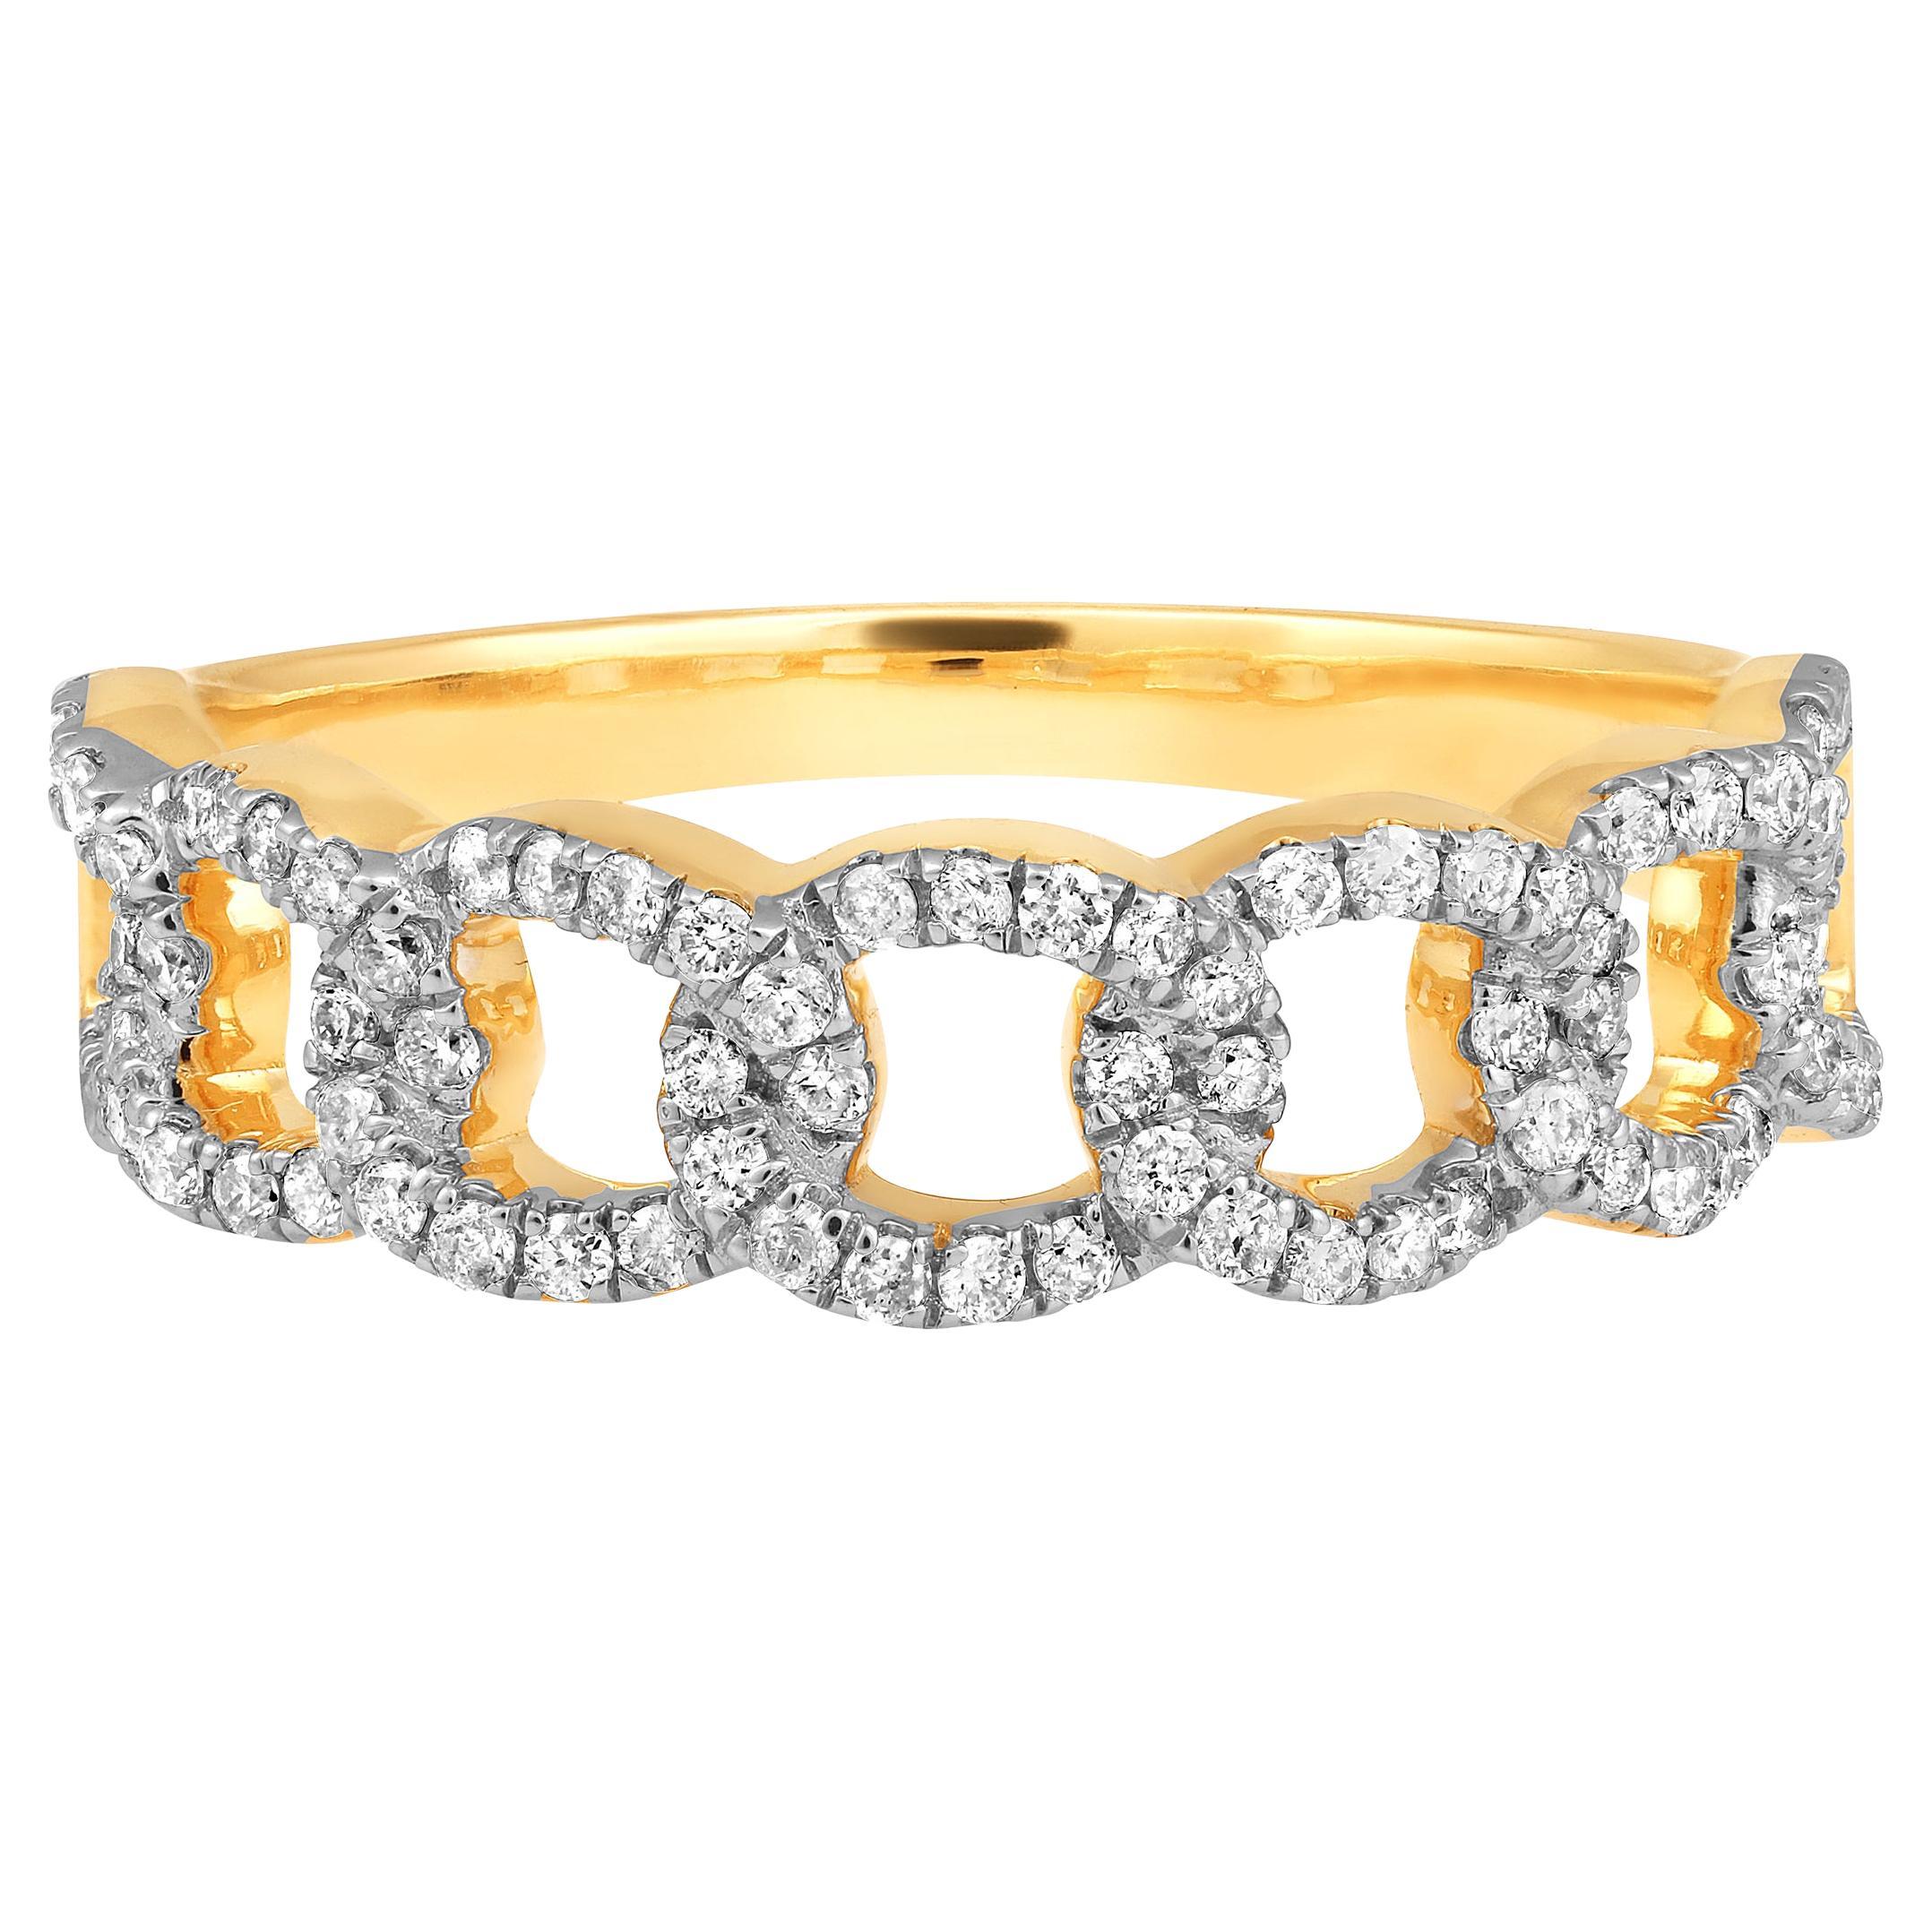 Certified 10k Gold 0.4ct Natural Diamond Designer Chain Link Cuban Yellow Ring